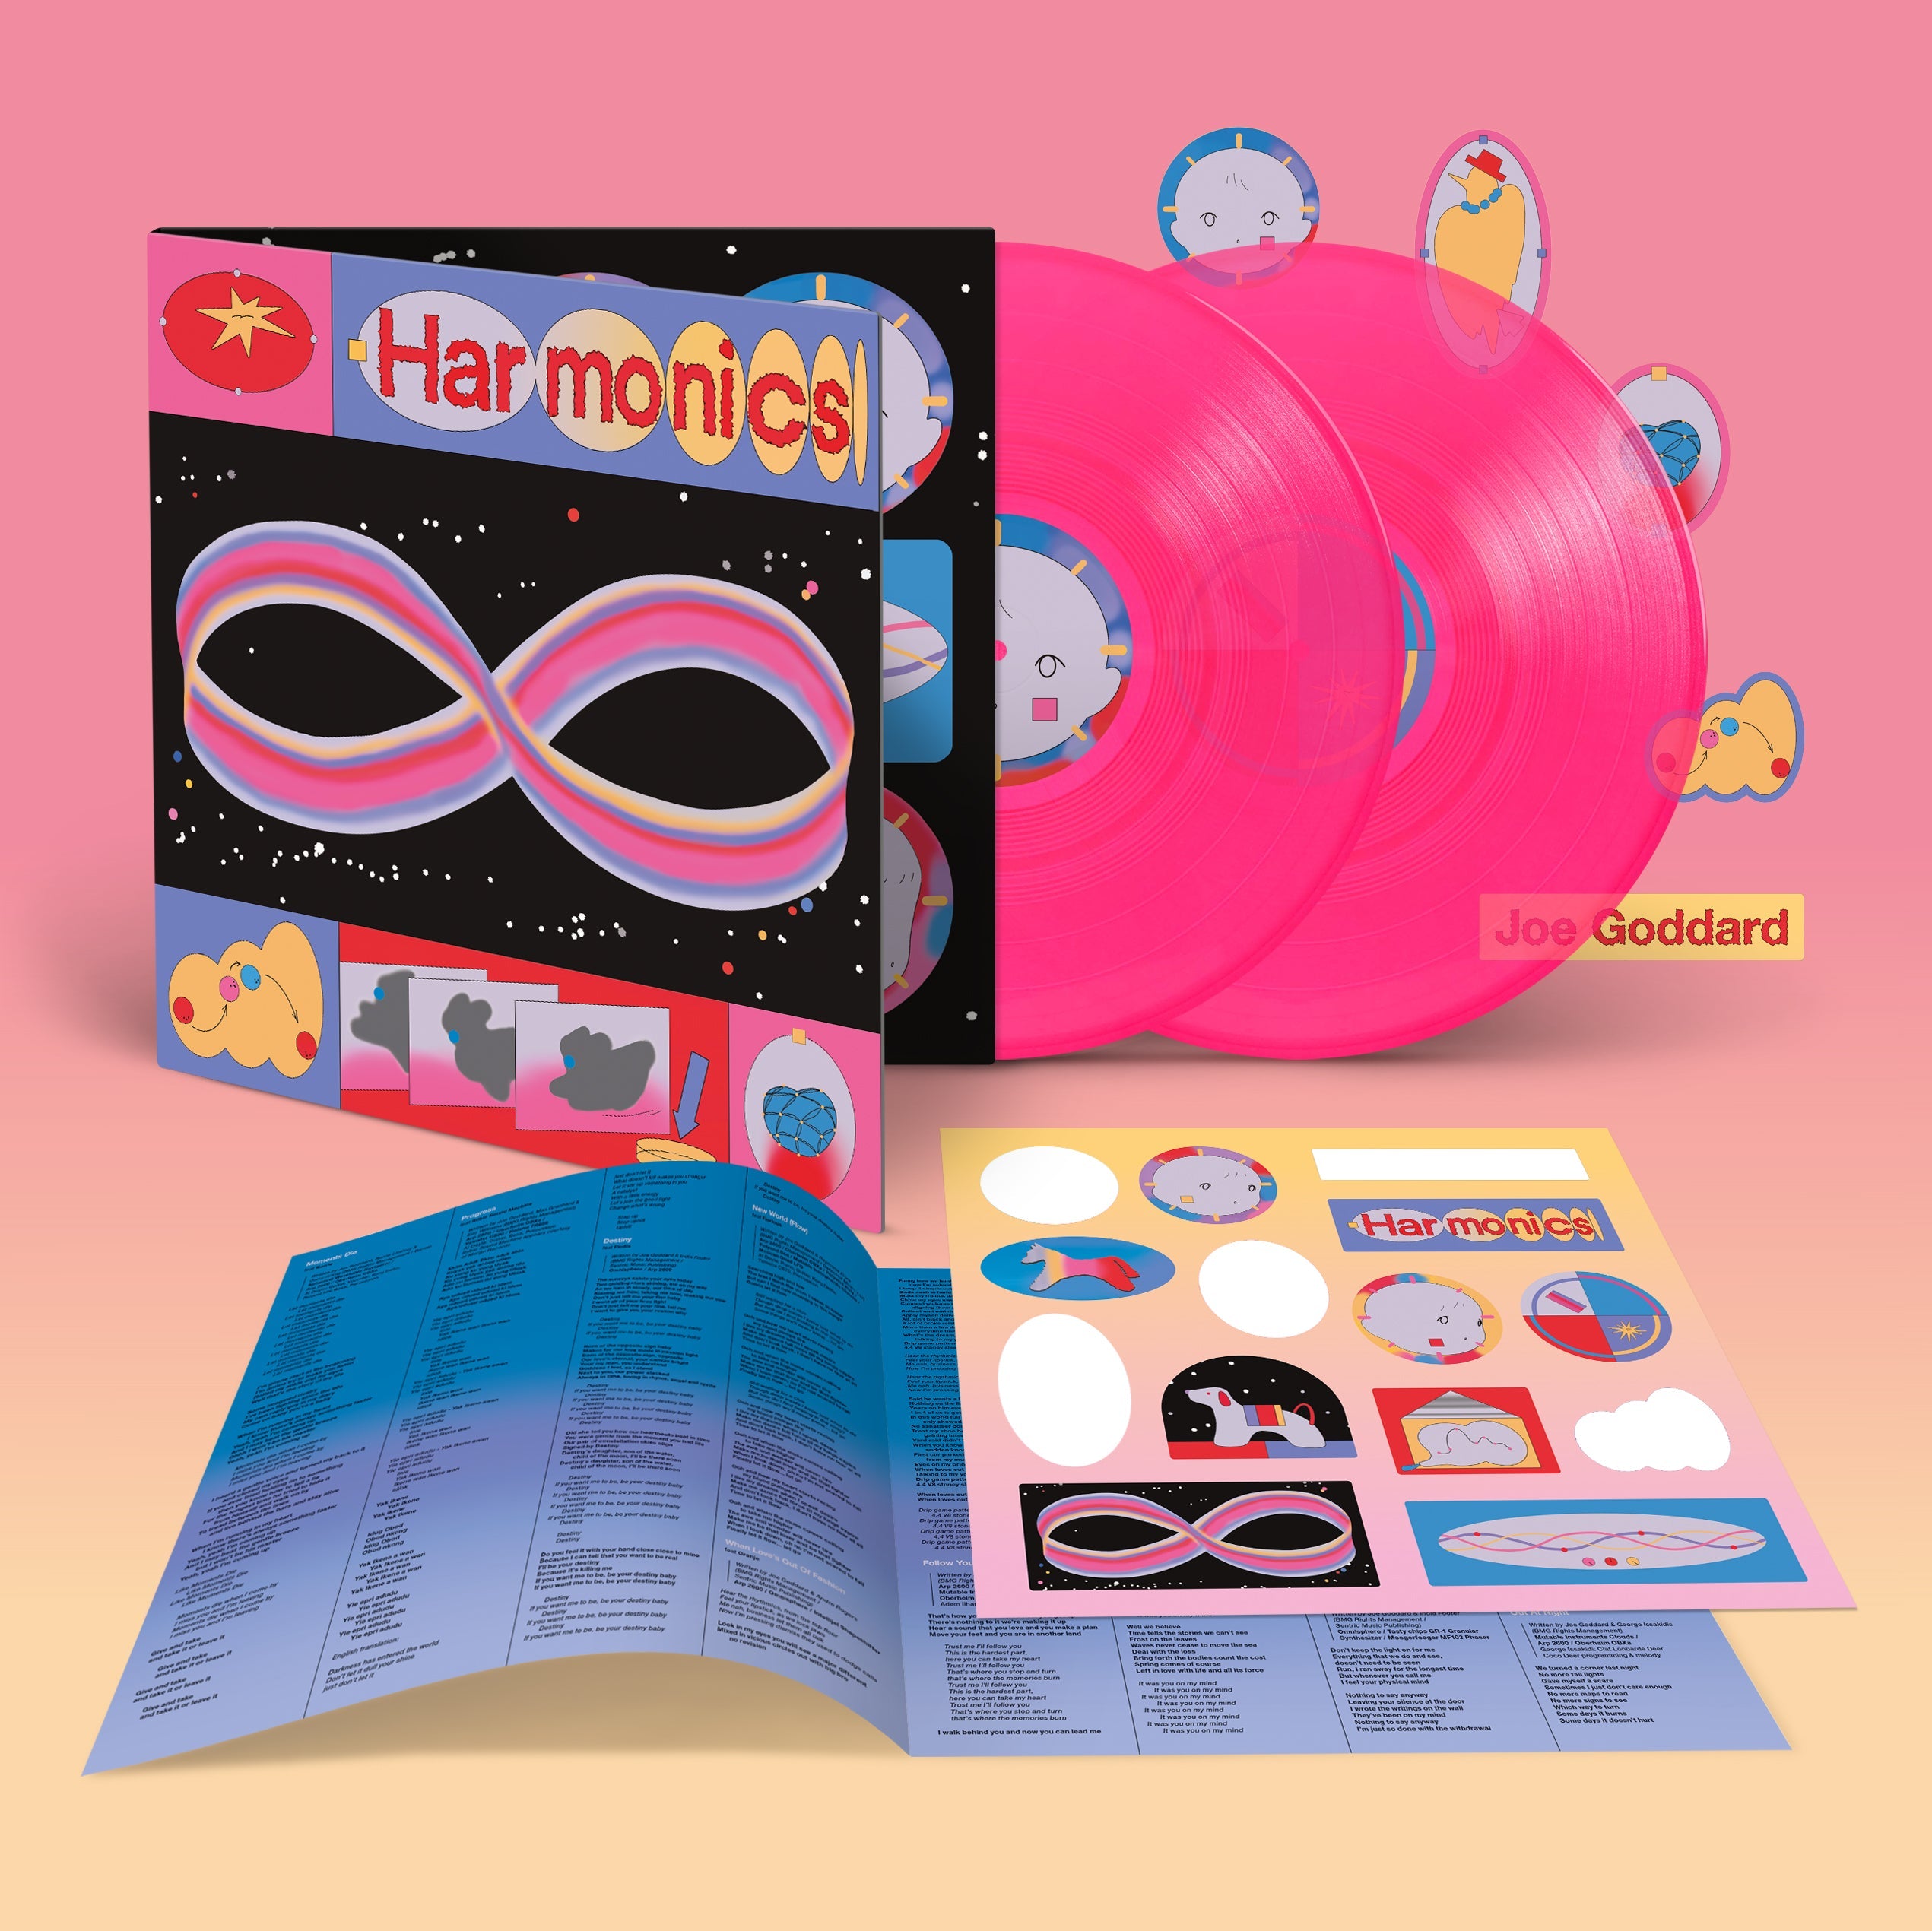 Harmonics: Limited Deluxe Transparent Pink Vinyl 2LP + Exclusive Signed Print